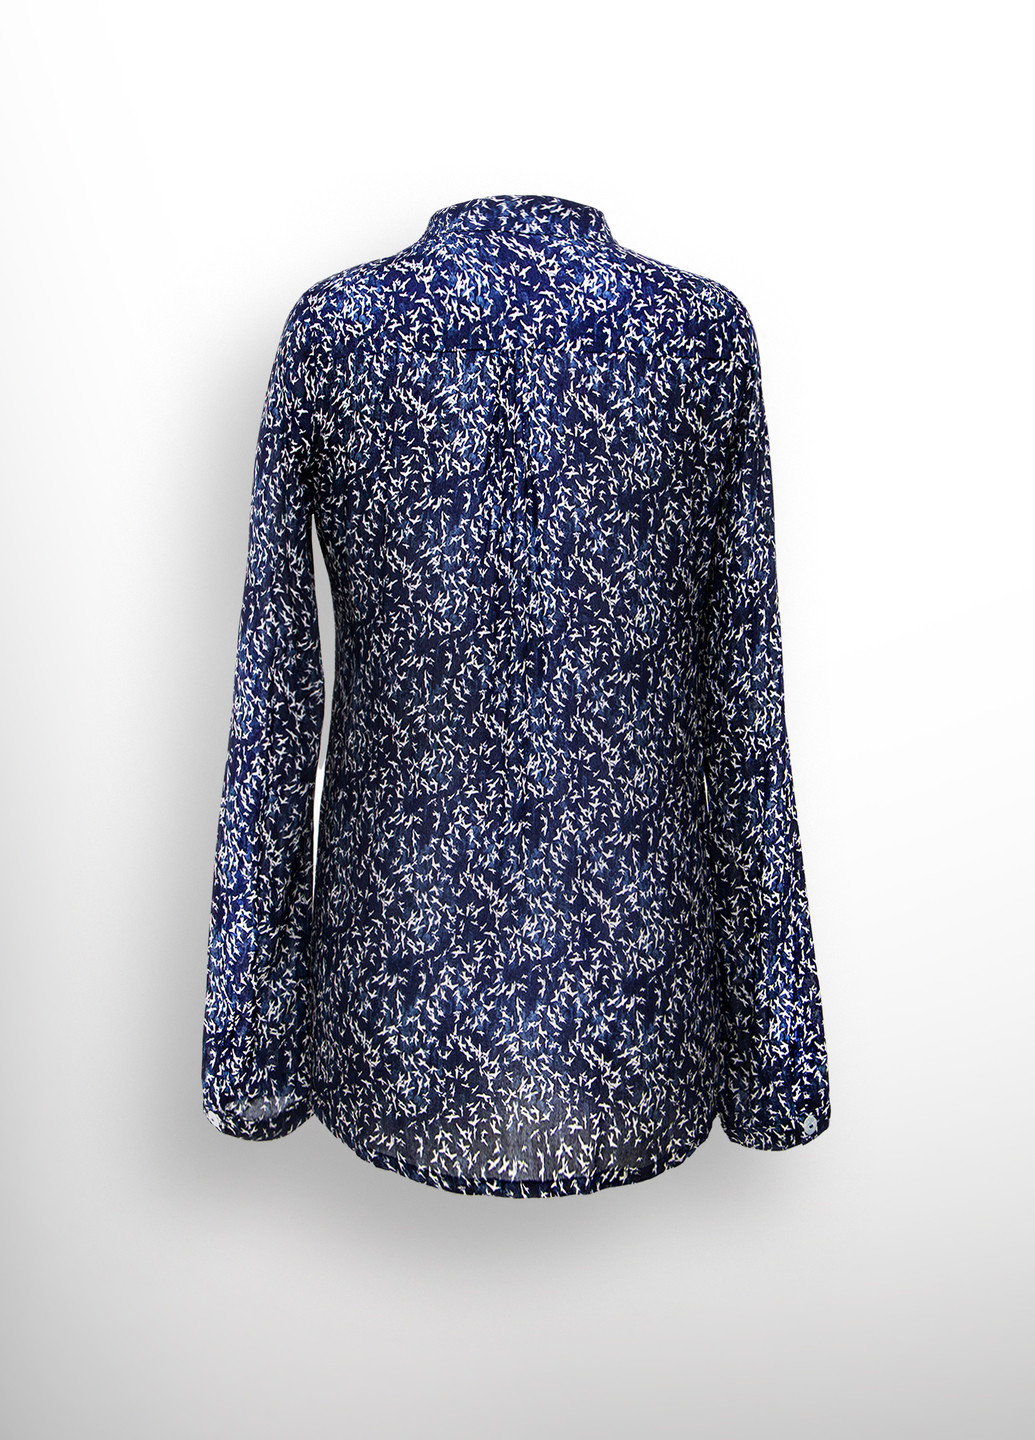 Тёмно-синяя блуза с полупланкой принт ласточки в79 Luxik